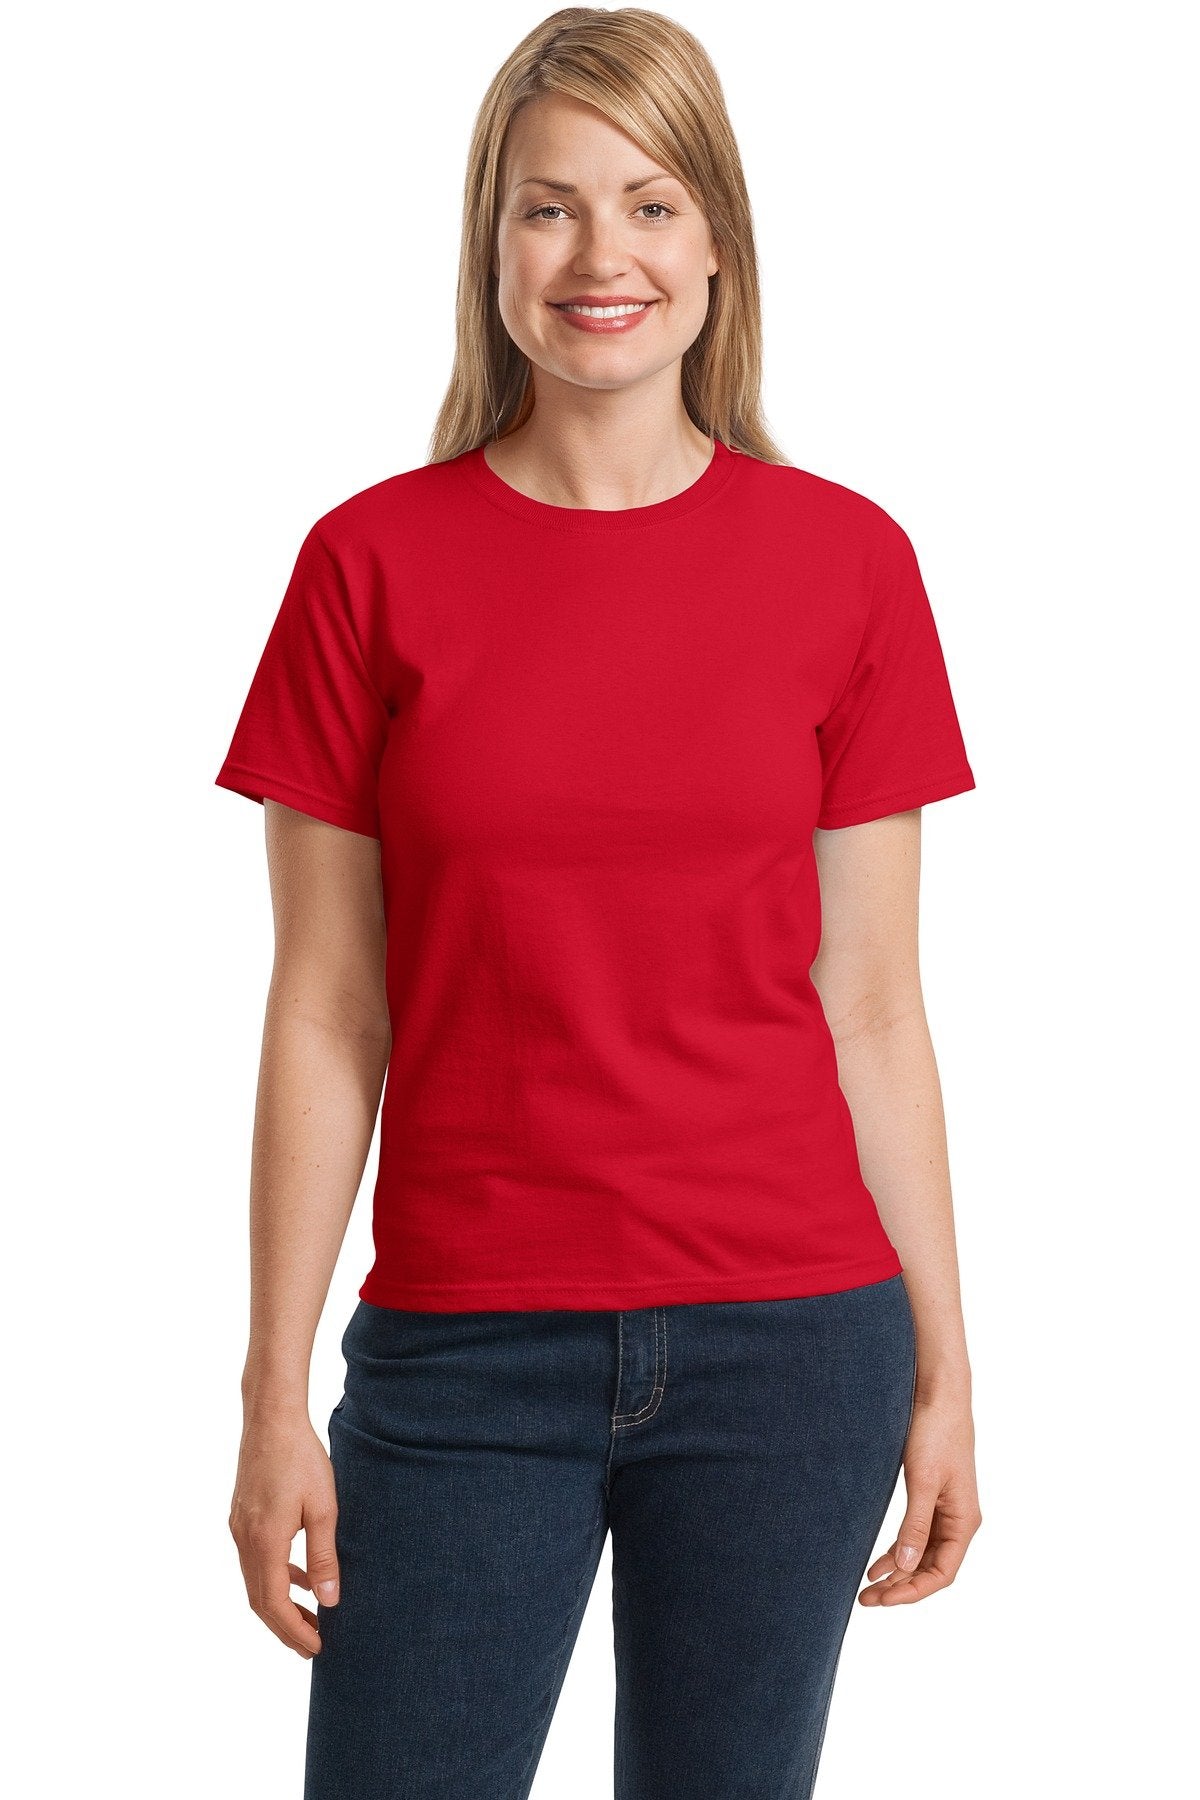 Hanes ComfortSoft Women`s Relaxed Fit Jersey Crewneck T-Shirt